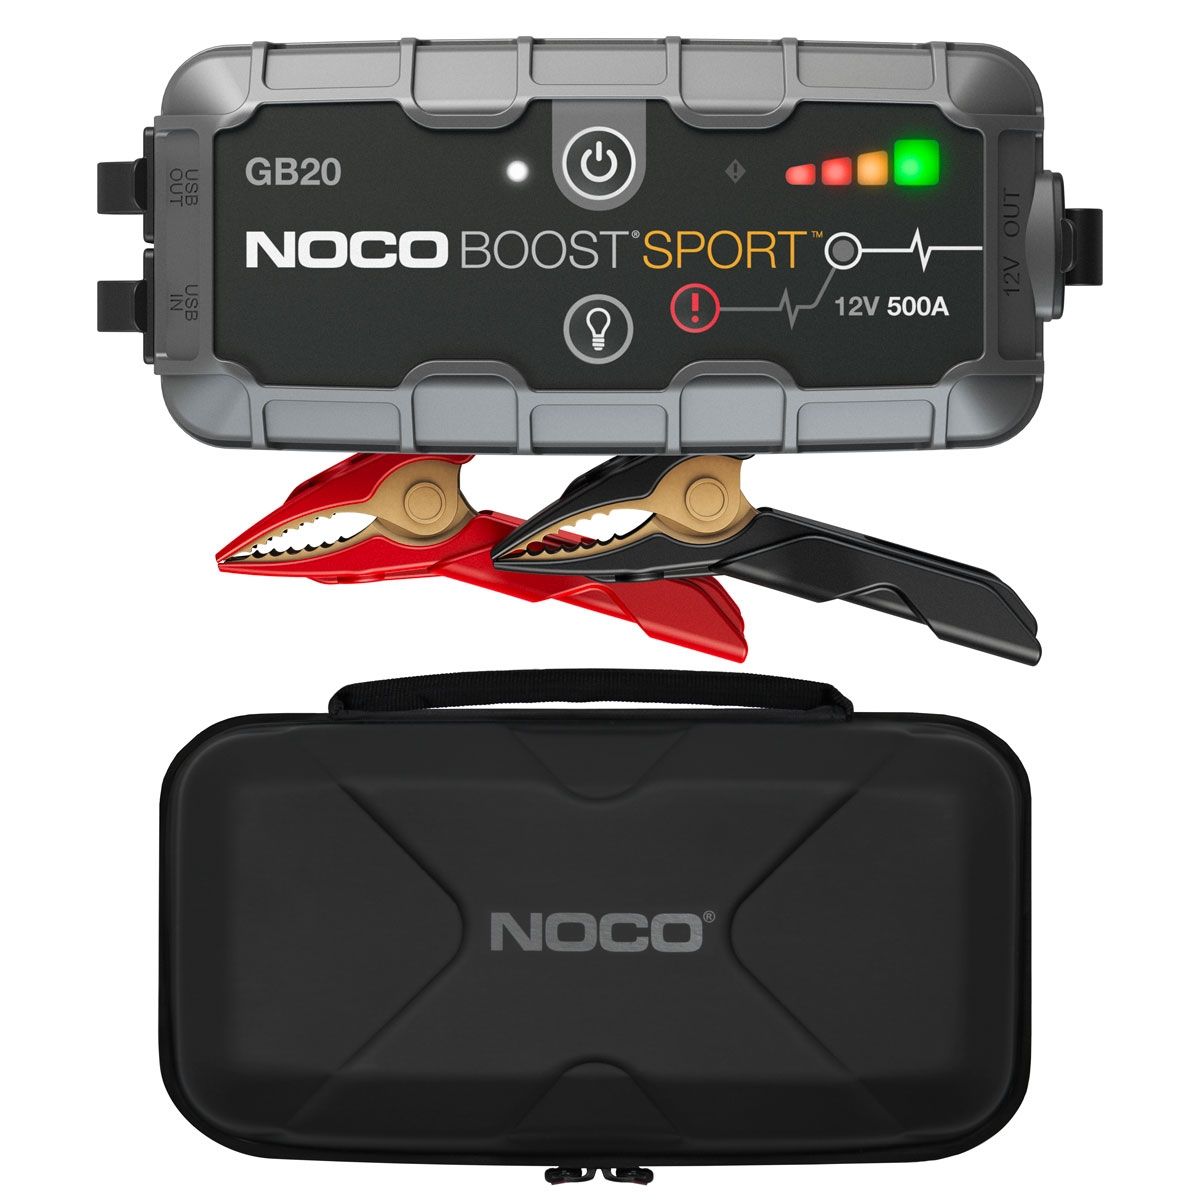 Noco GB20 Boost Sport 500A UltraSafe Lithium Jump Starter